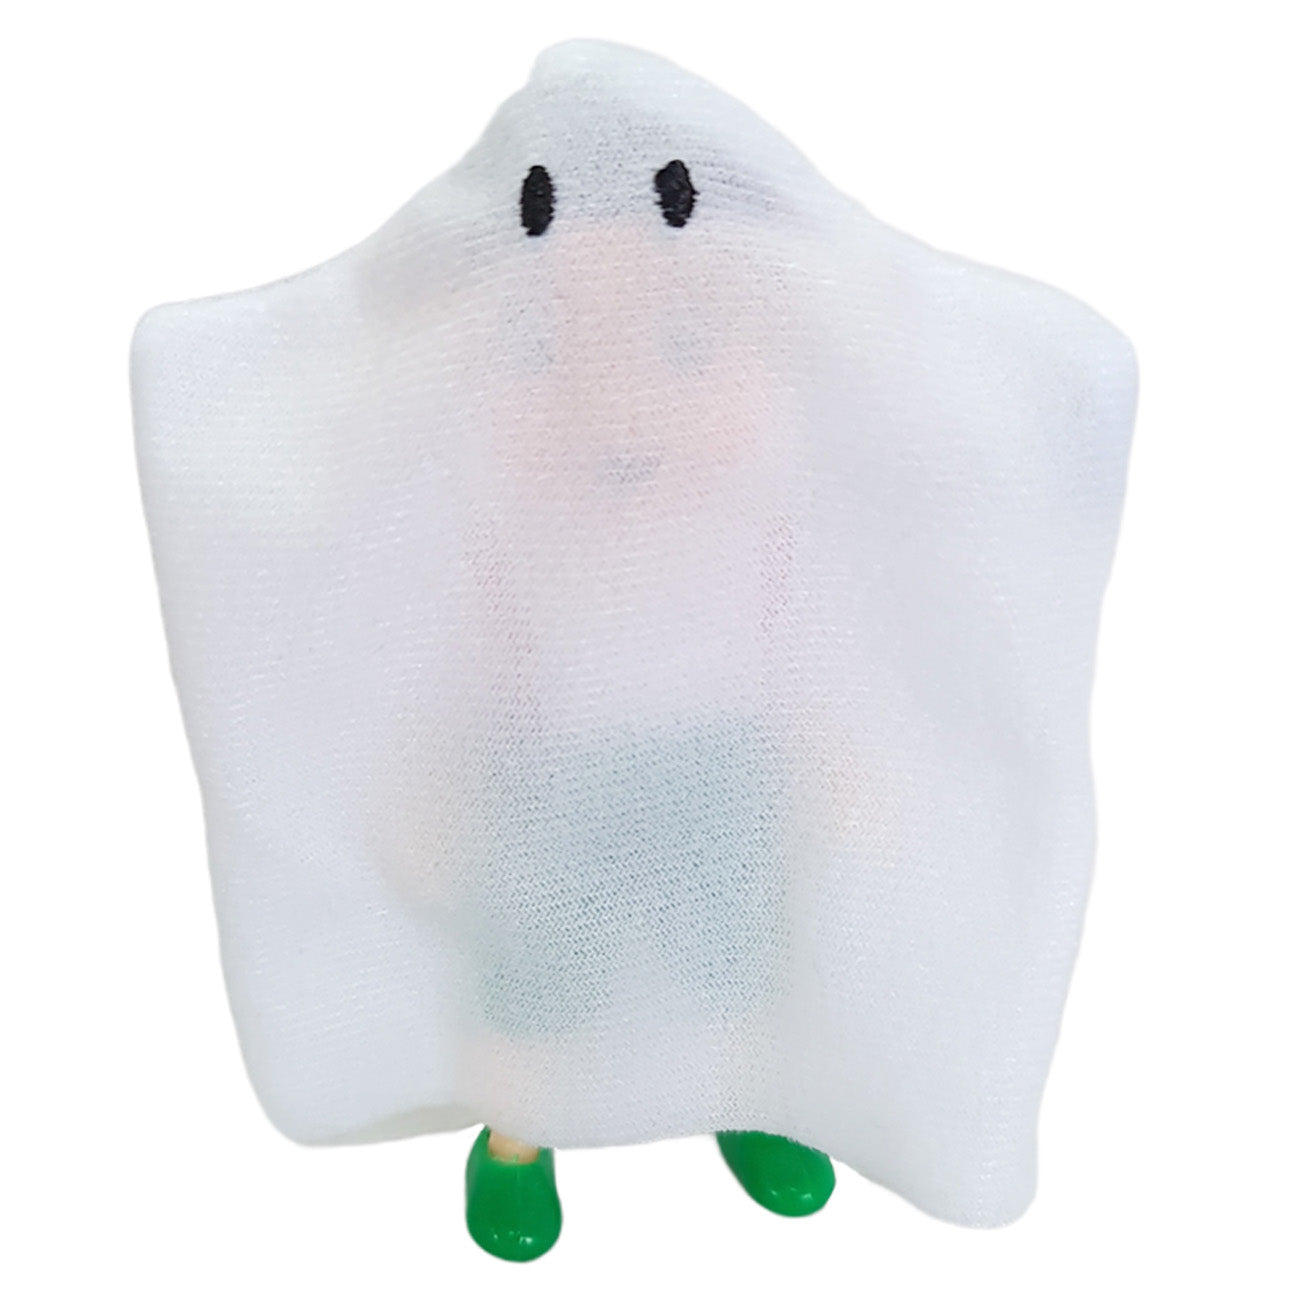 Toddler ELf Ghost Costume